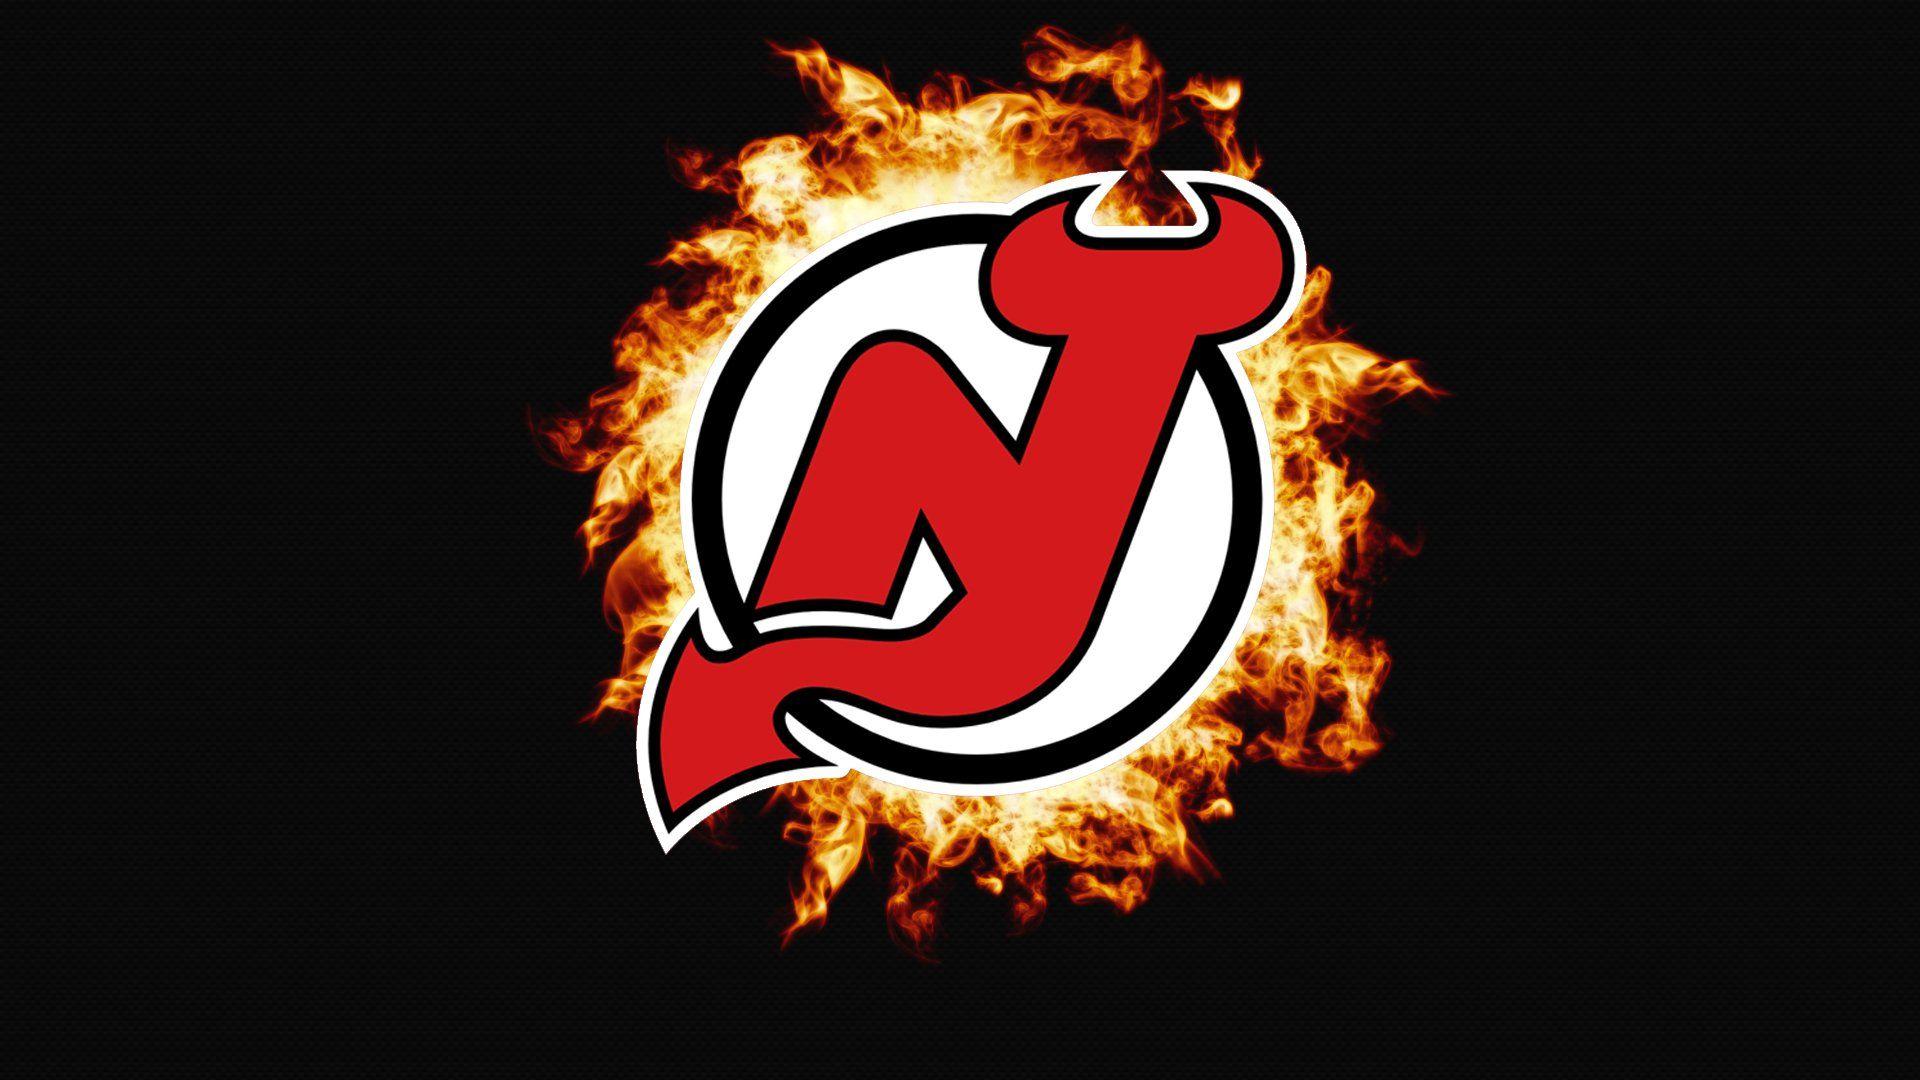 NHL New Jersey Devils Logo Black wallpaper 2018 in Hockey